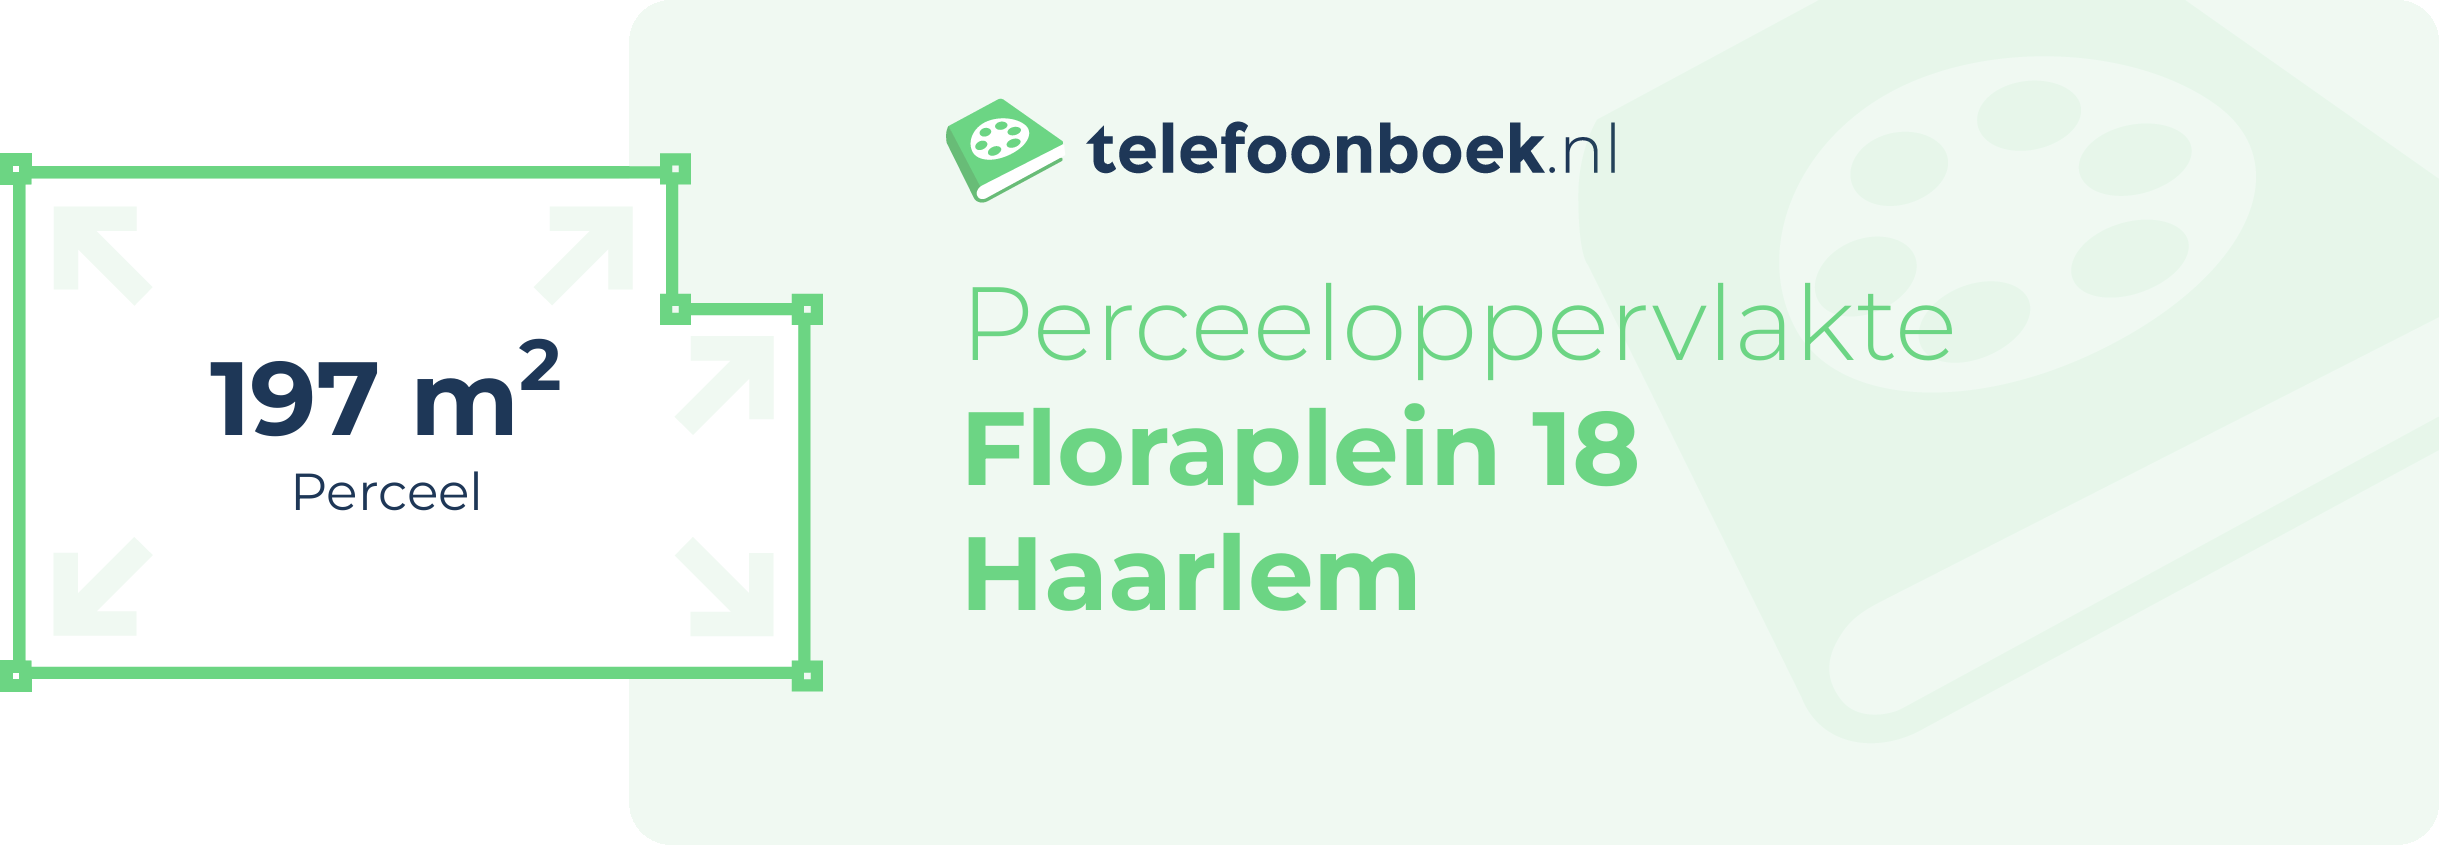 Perceeloppervlakte Floraplein 18 Haarlem